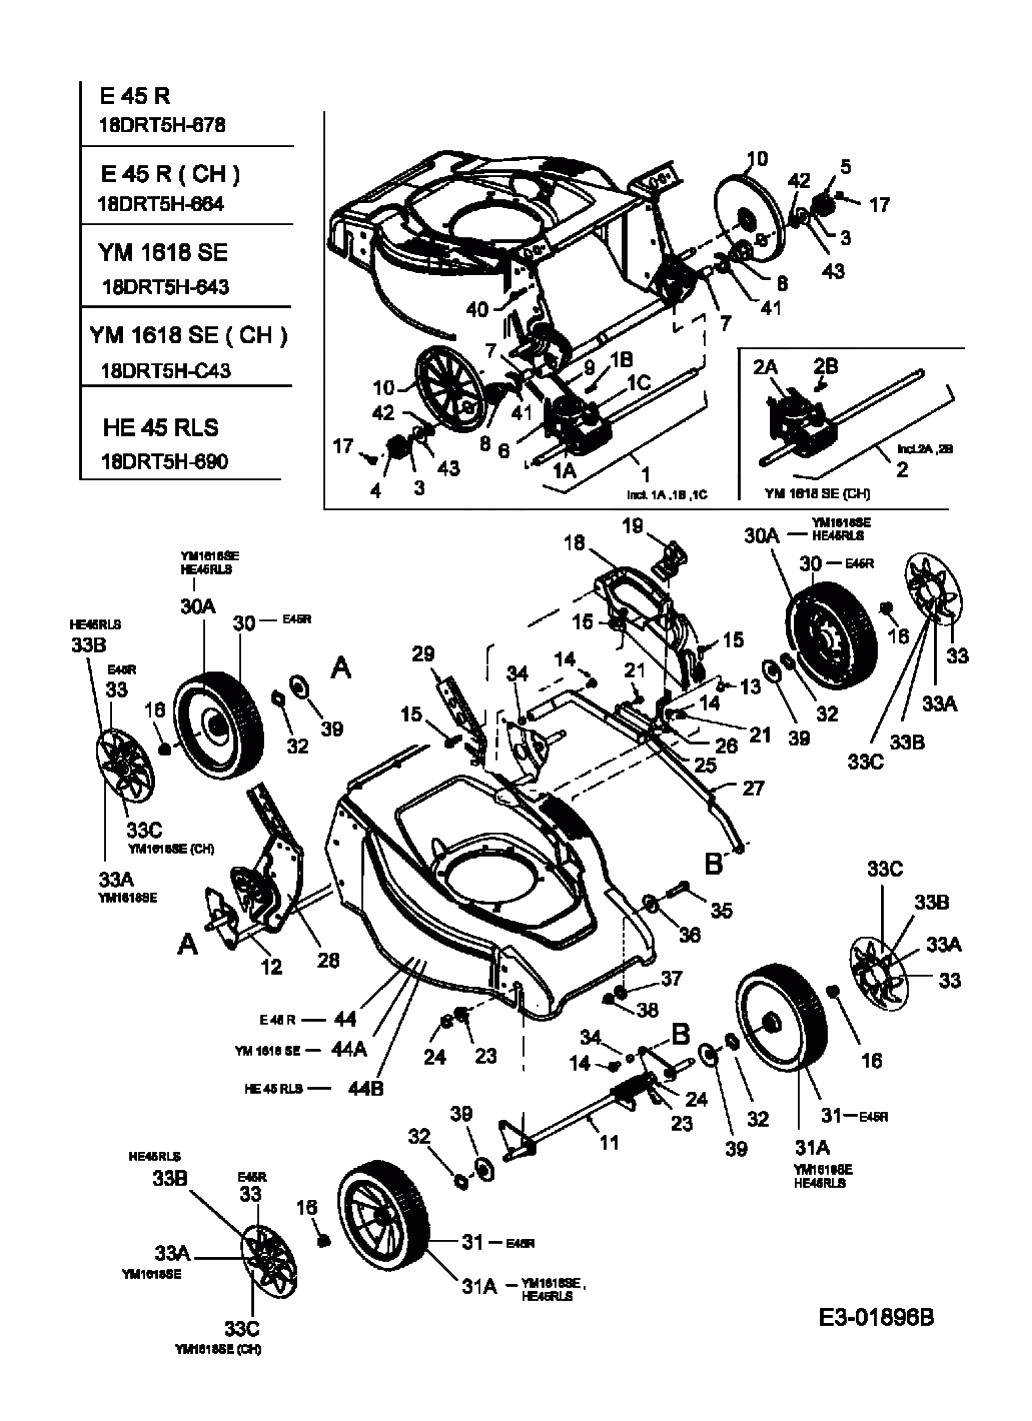 MTD Артикул 18DRT5H-678 (год выпуска 2005). Коробка передач, колеса, регулятор высоты